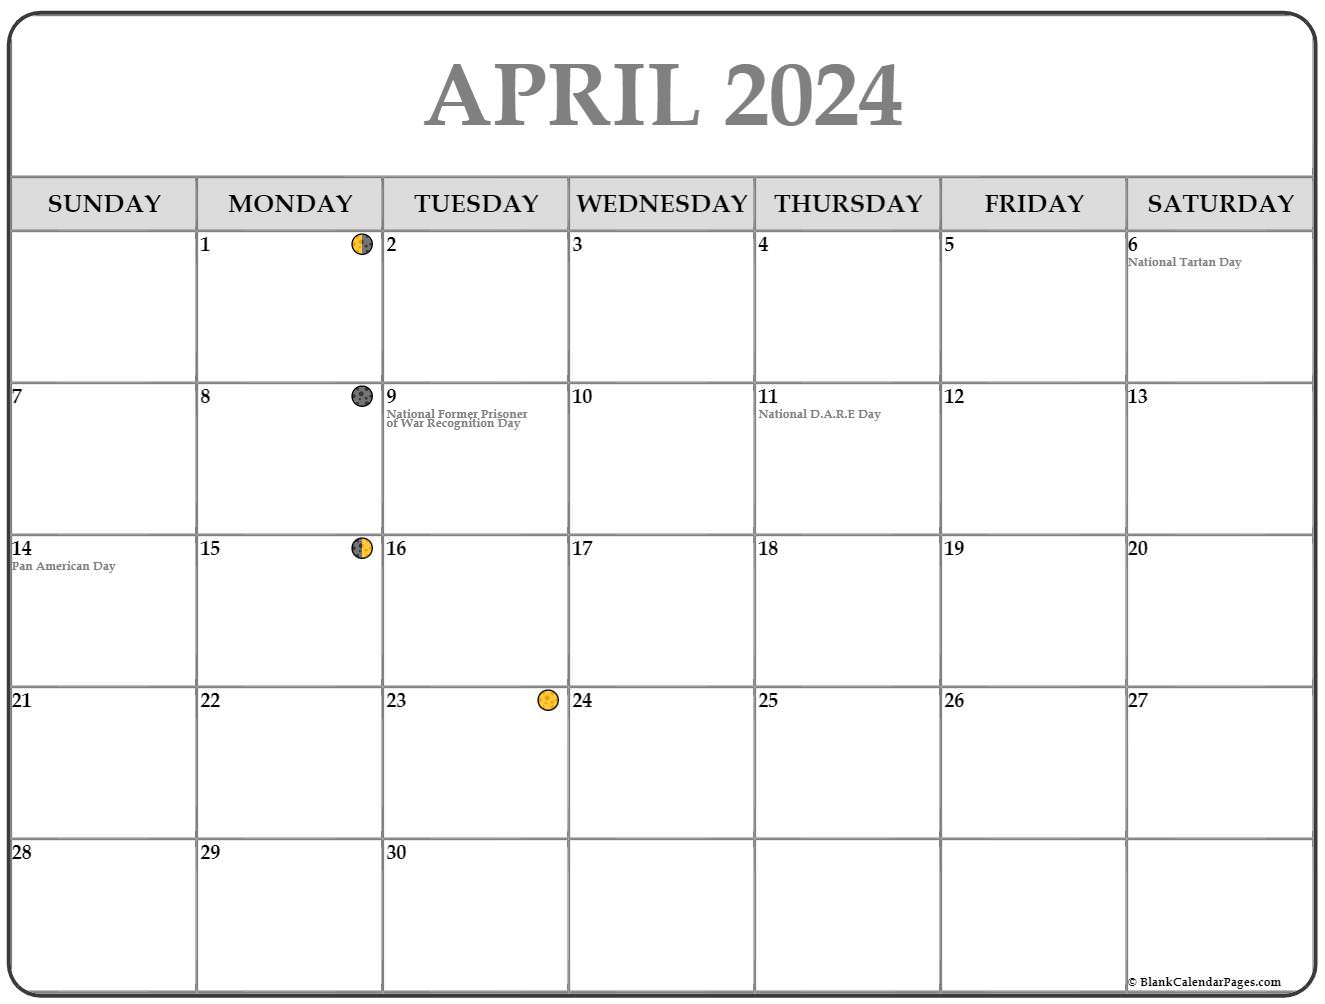 Lunar Calendar April 2022 April 2022 Lunar Calendar | Moon Phase Calendar